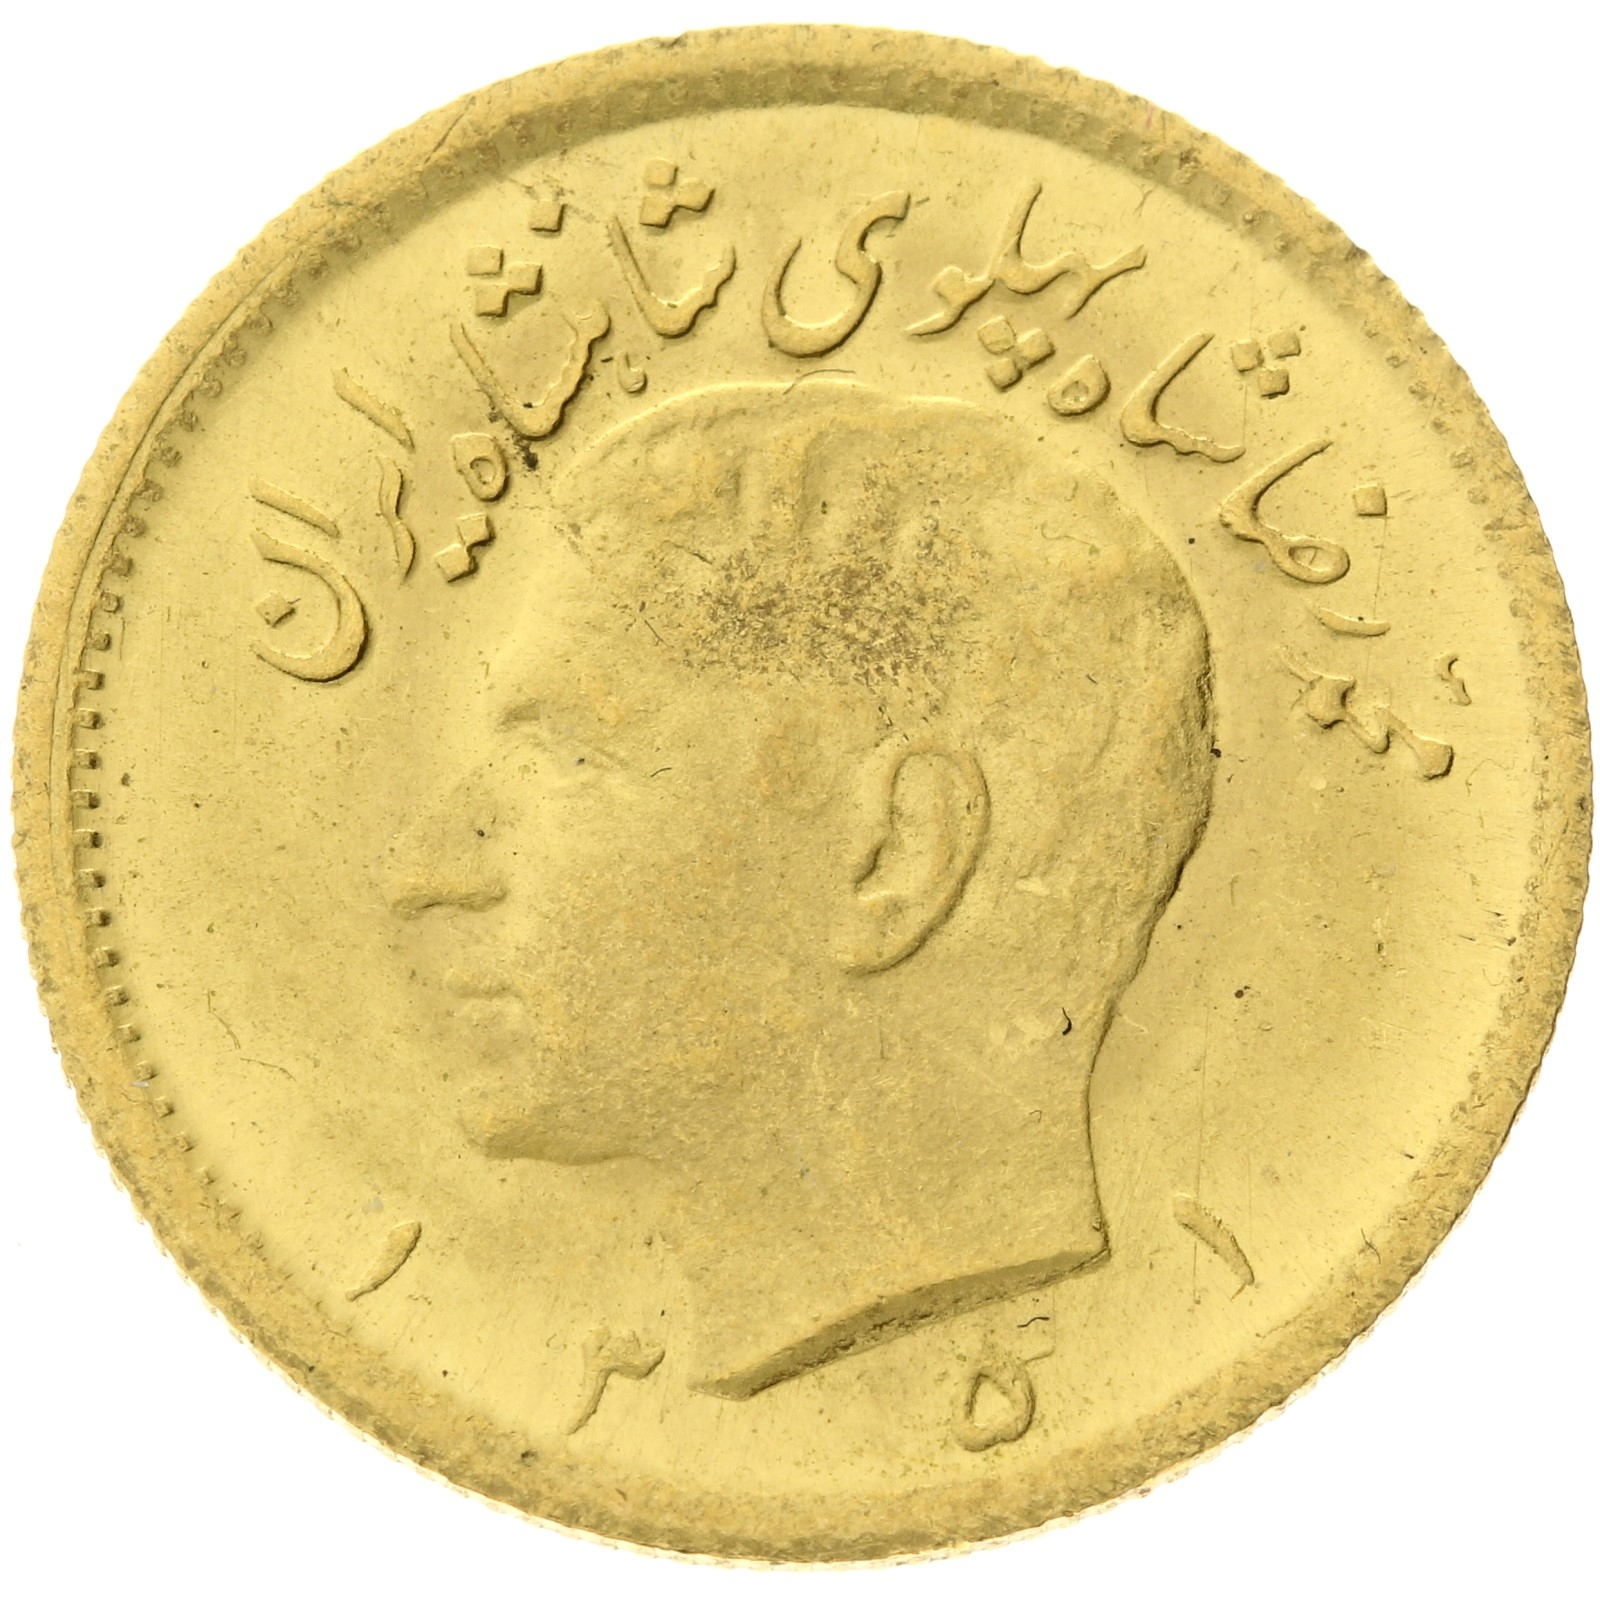 Iran - 1/2 pahlavi - 1972 (1351) - Mohammad Rezā Pahlavī 